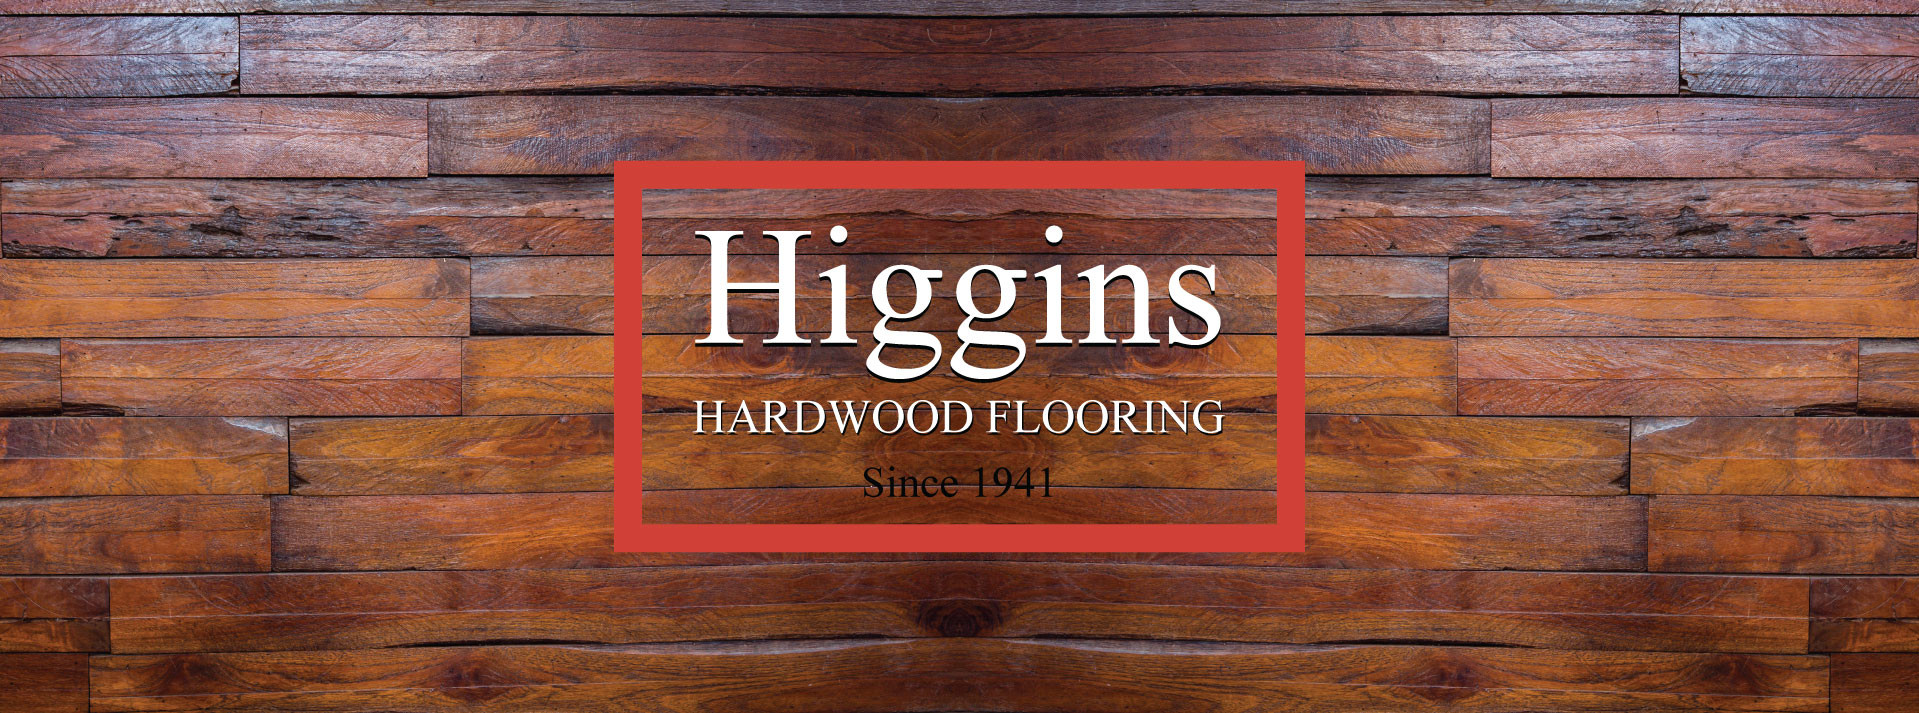 Hardwood Flooring Manufacturers List Of Higgins Hardwood Flooring In Peterborough Oshawa Lindsay Ajax Within Office Hours 